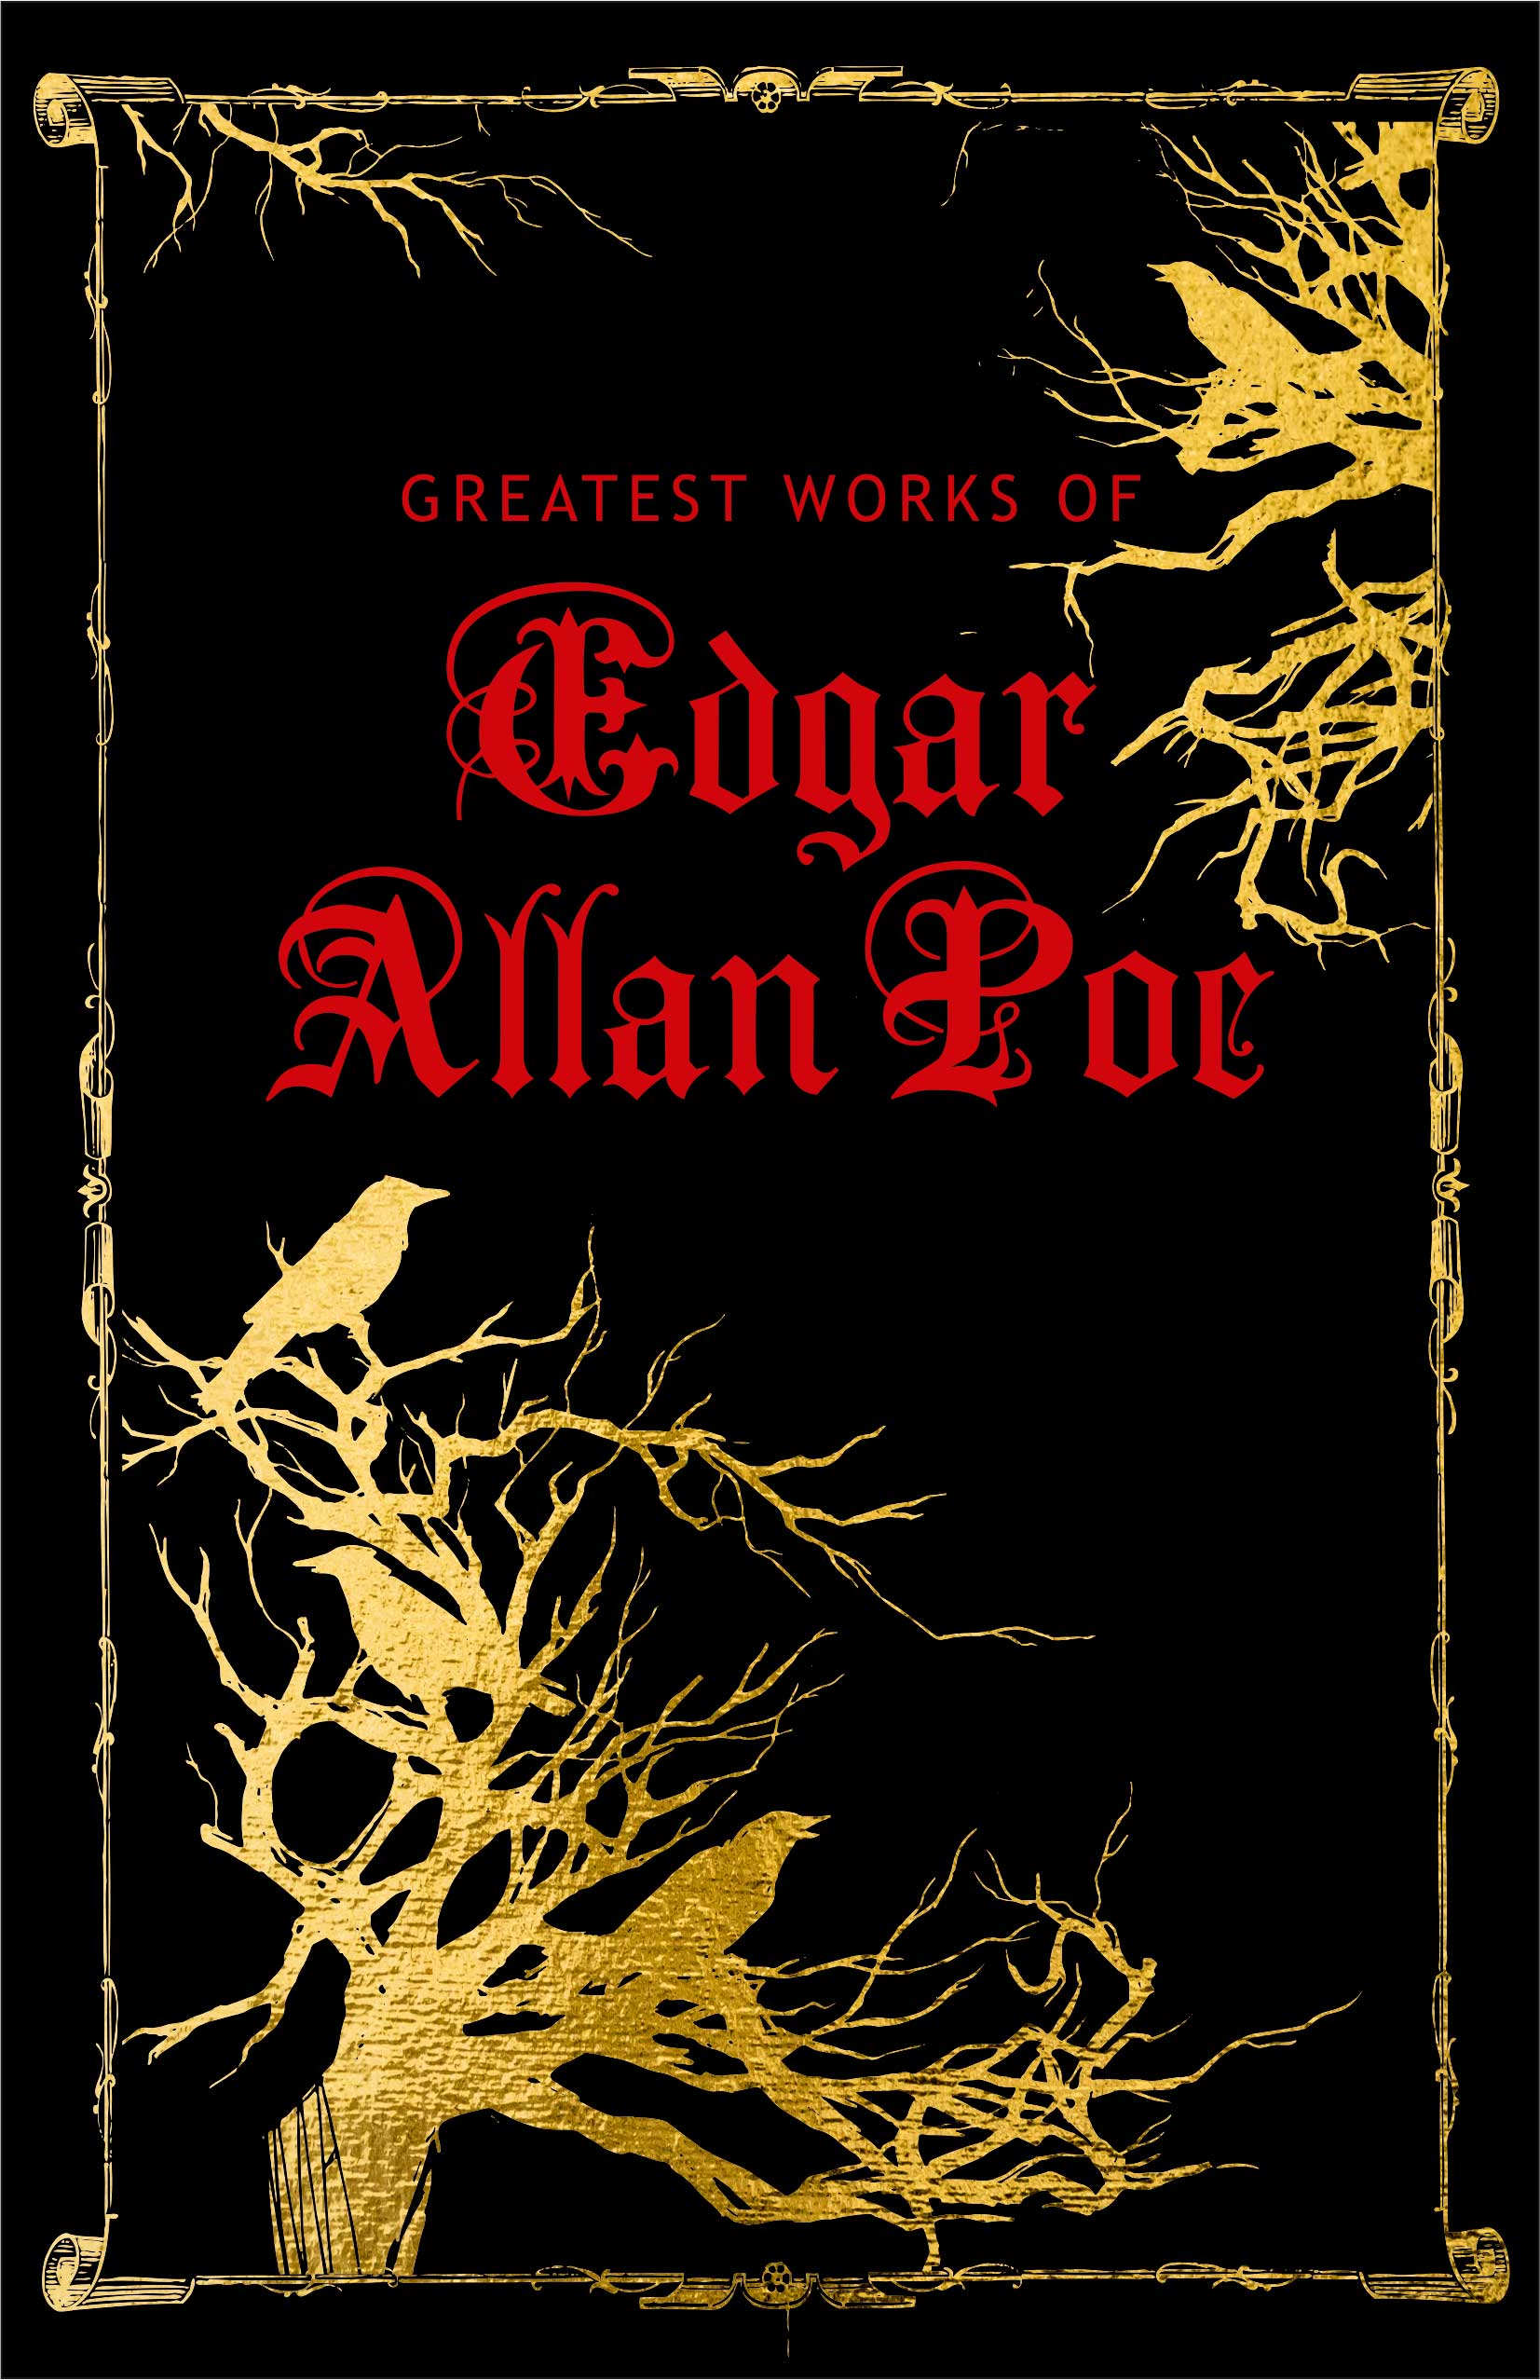 Greatest Works of Edgar Allan Poe (Deluxe Hardbound Edition)